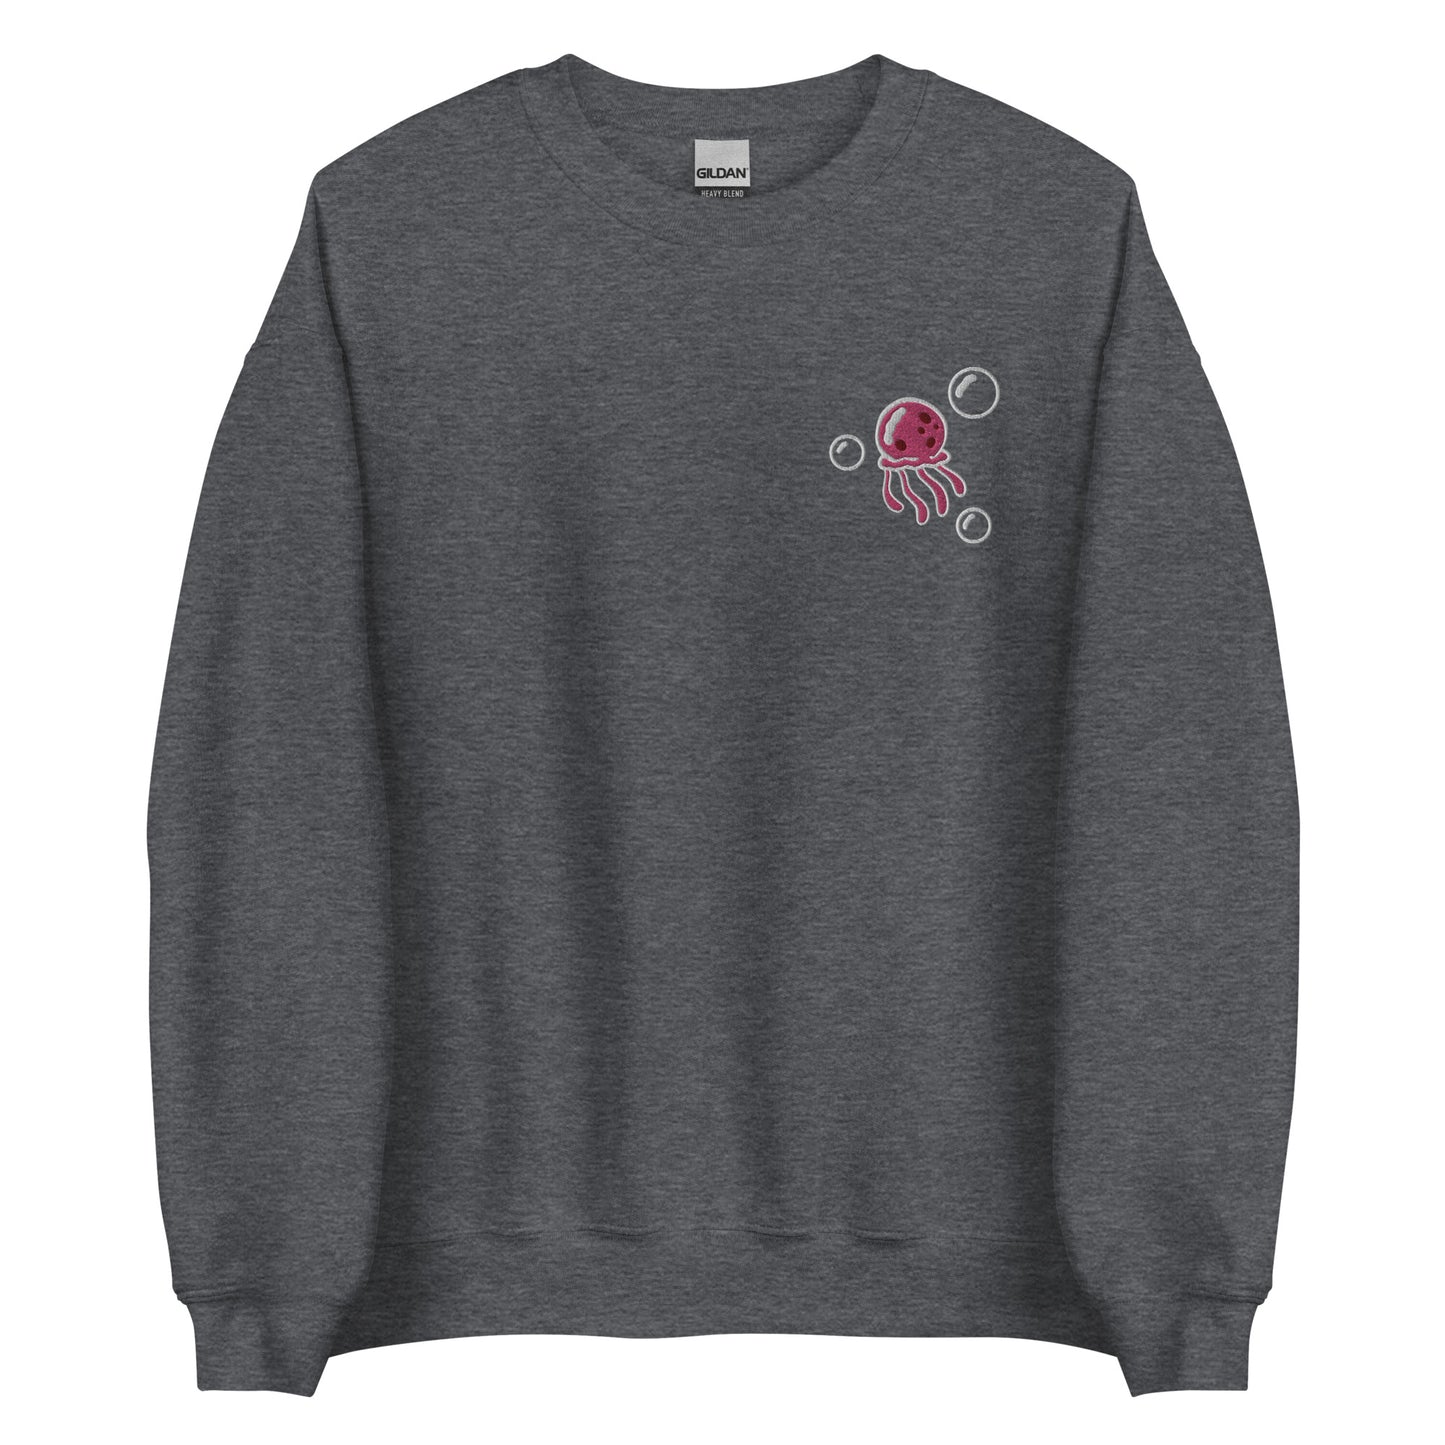 Jellyfish PINK embroidered crewneck sweatshirt